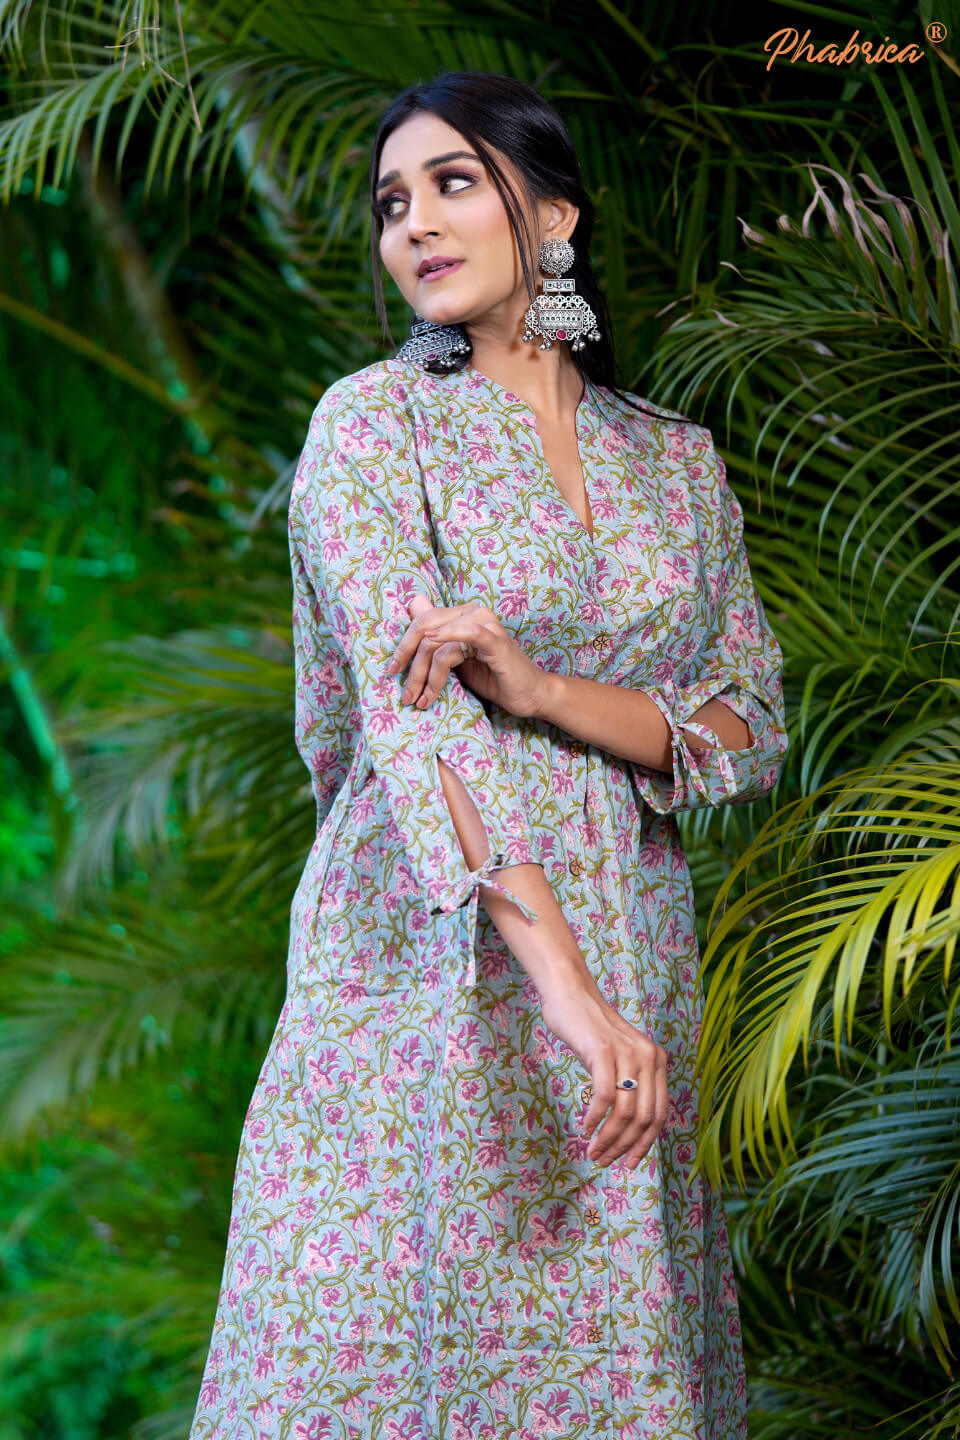 Indian Cotton Floral Kurta Kurti Designer Women Ethnic Dress Top Tunic  Party | eBay